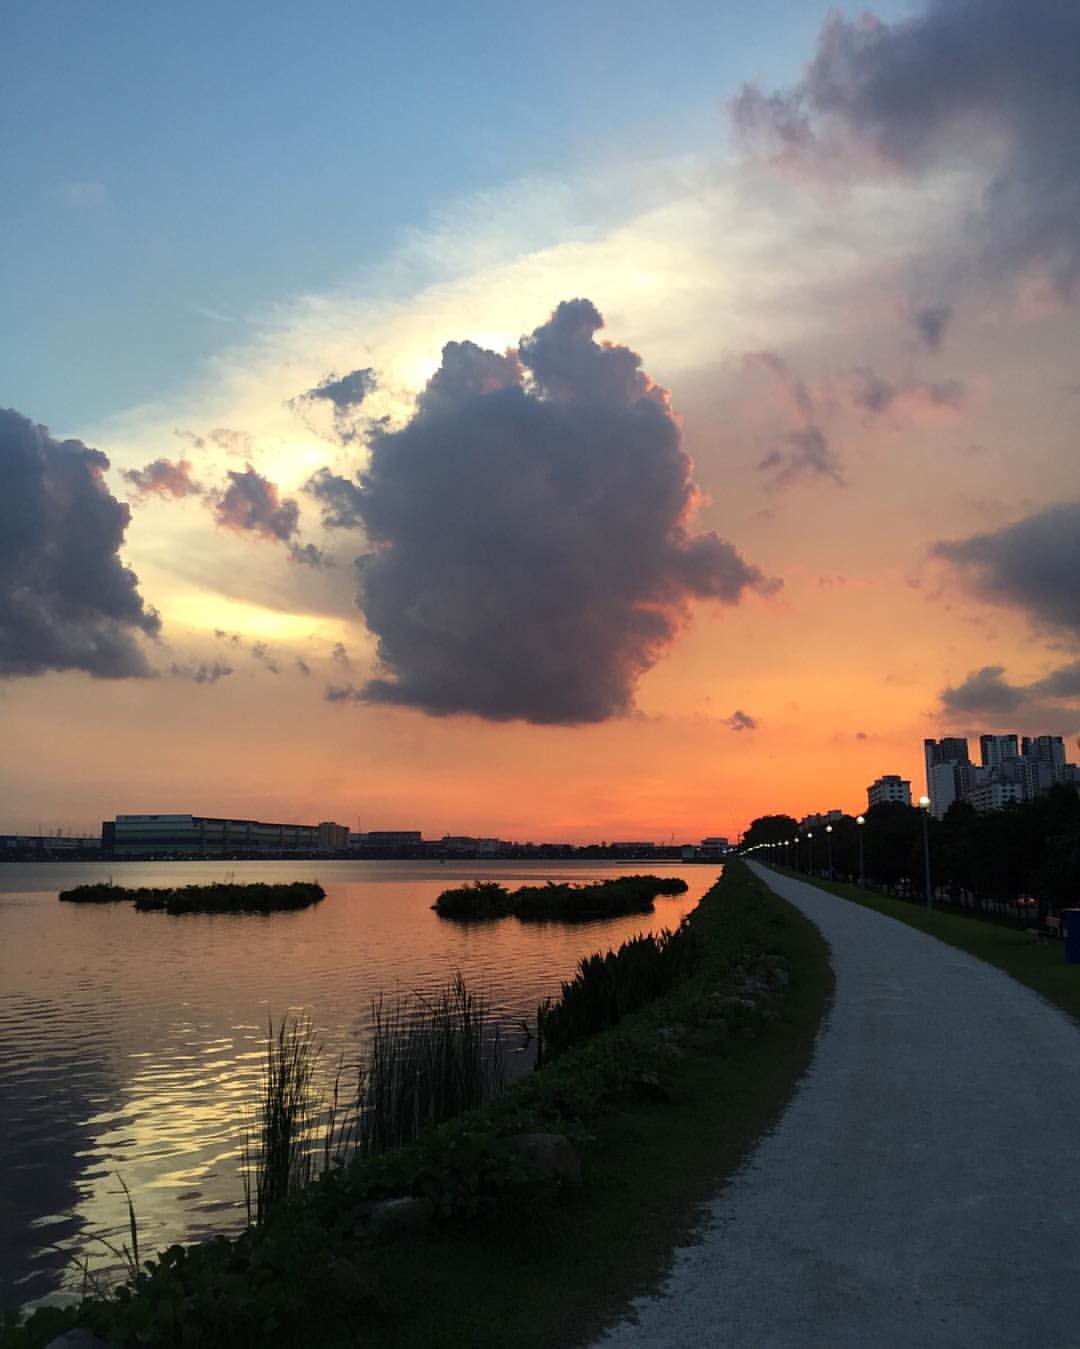 Evening, Pandan Reservoir, Singapore